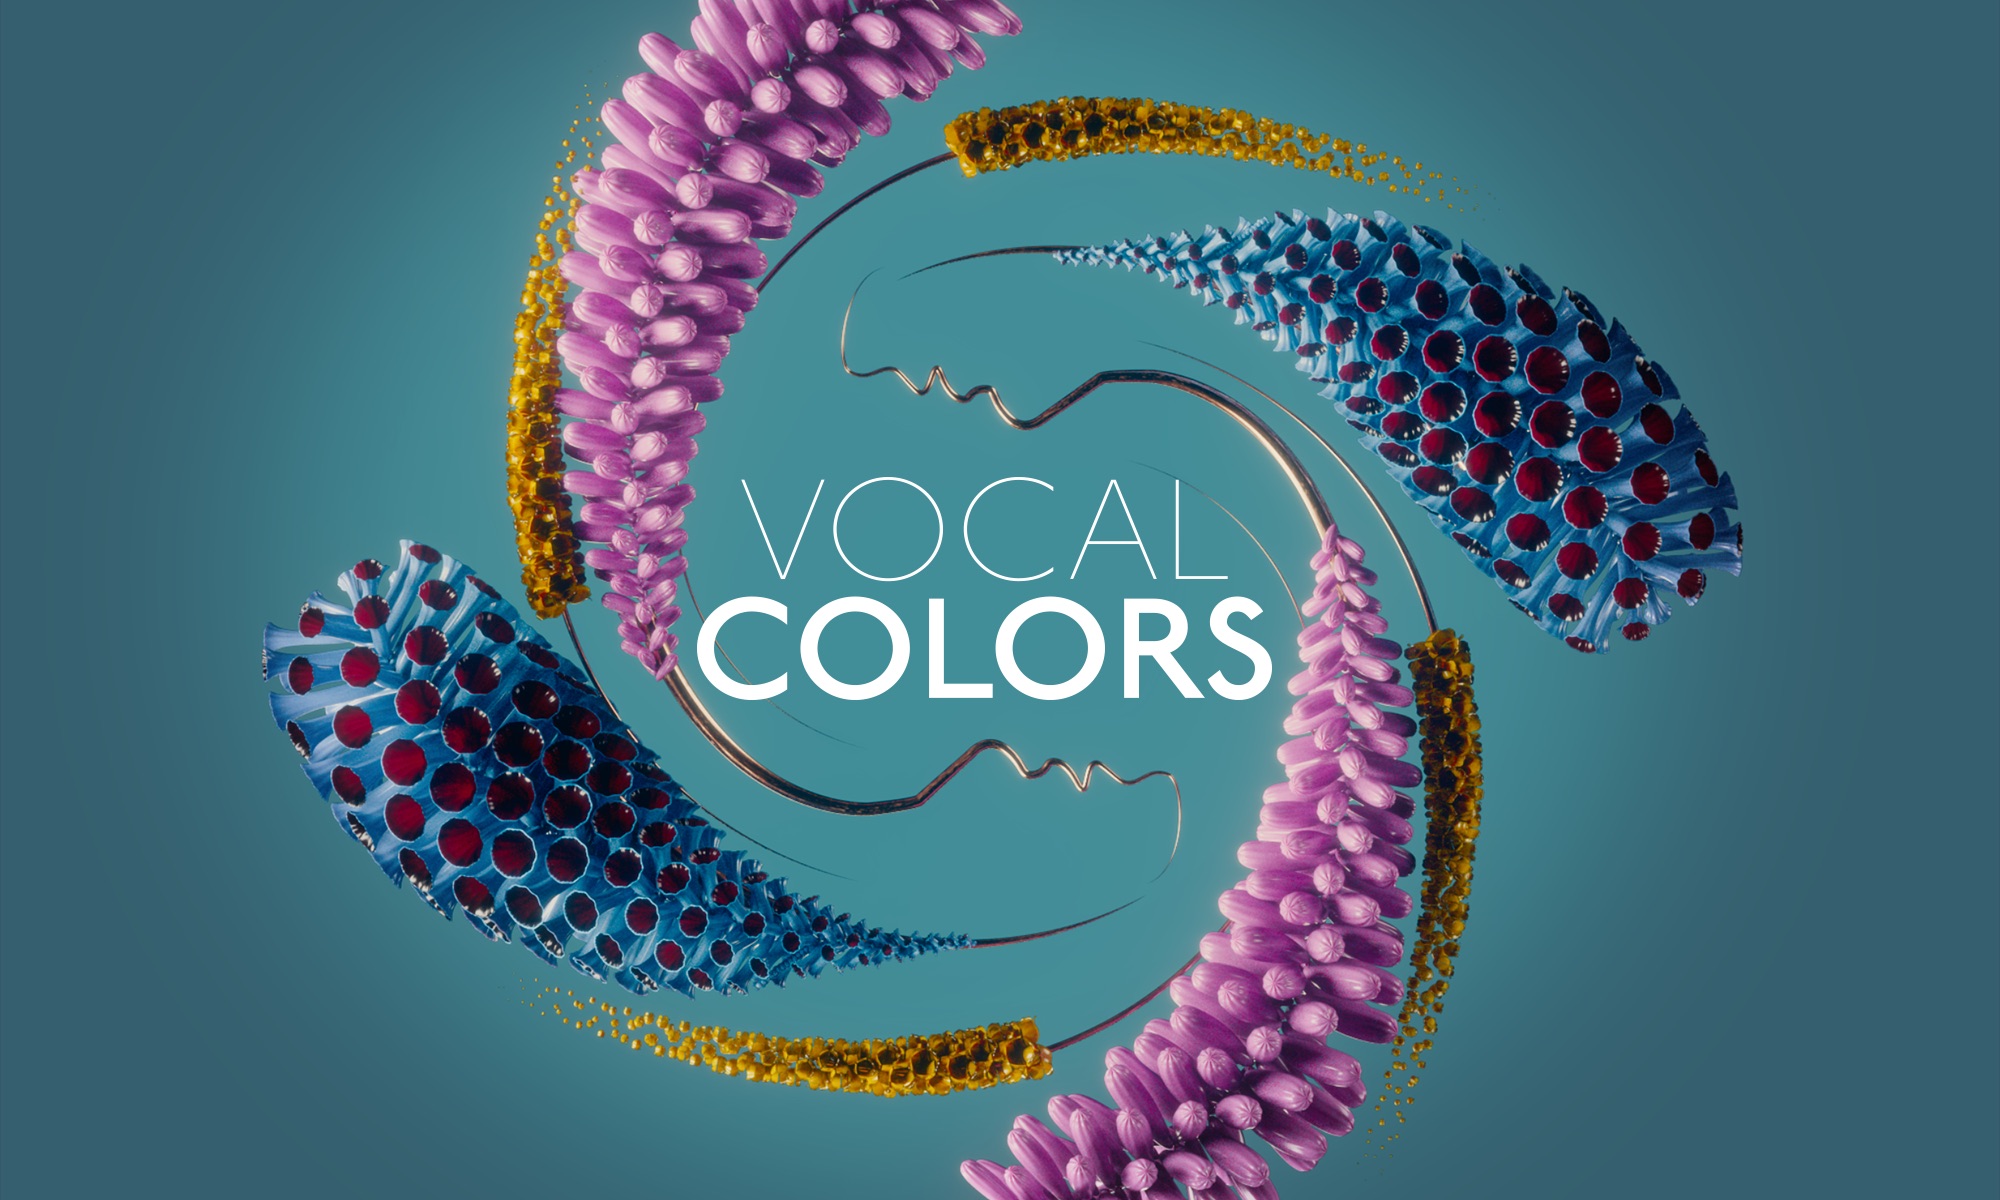 Vocal-Colors-manual-web-cover.jpeg